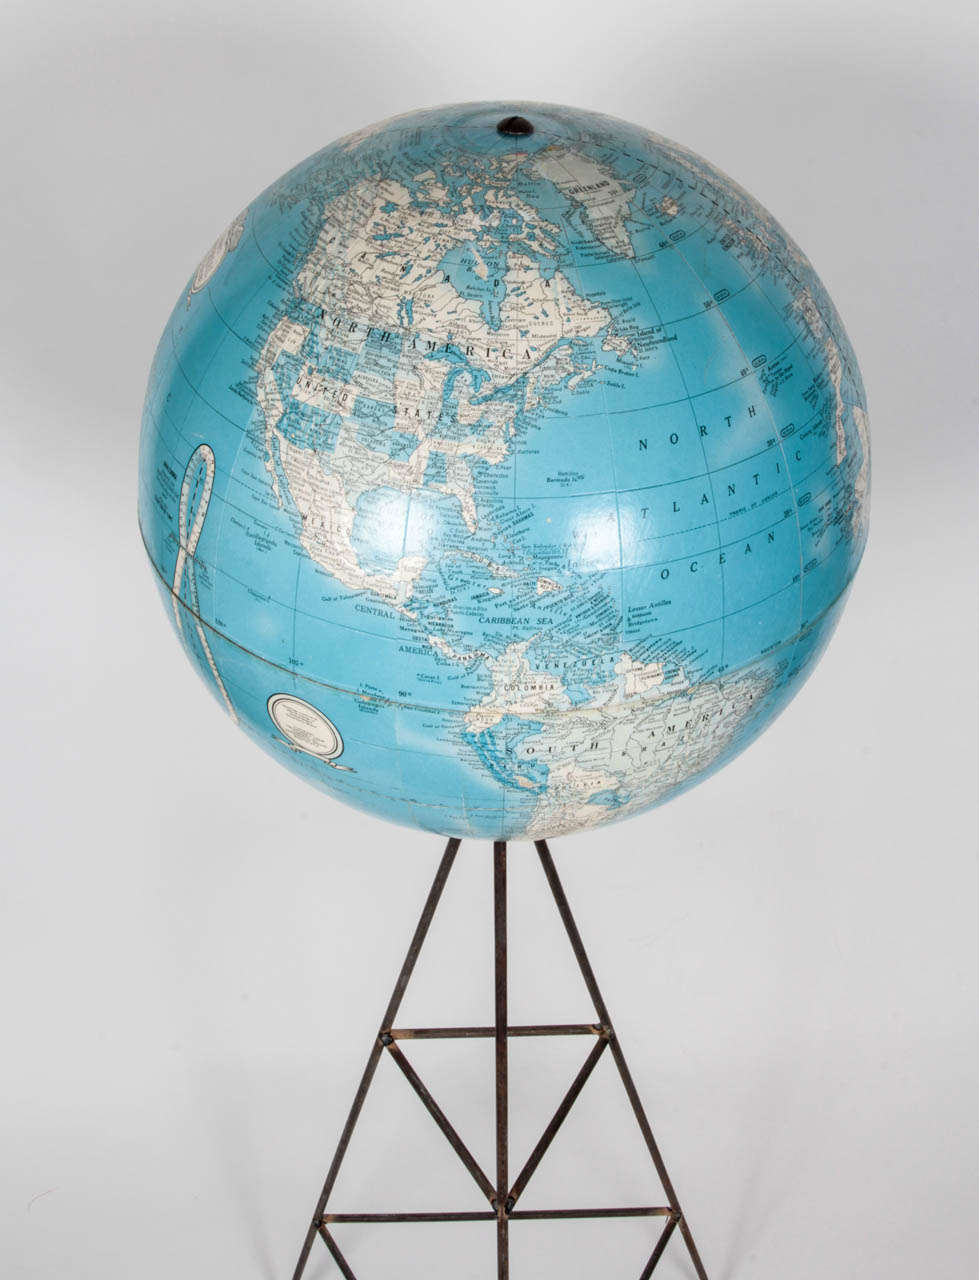 cram's imperial world globe